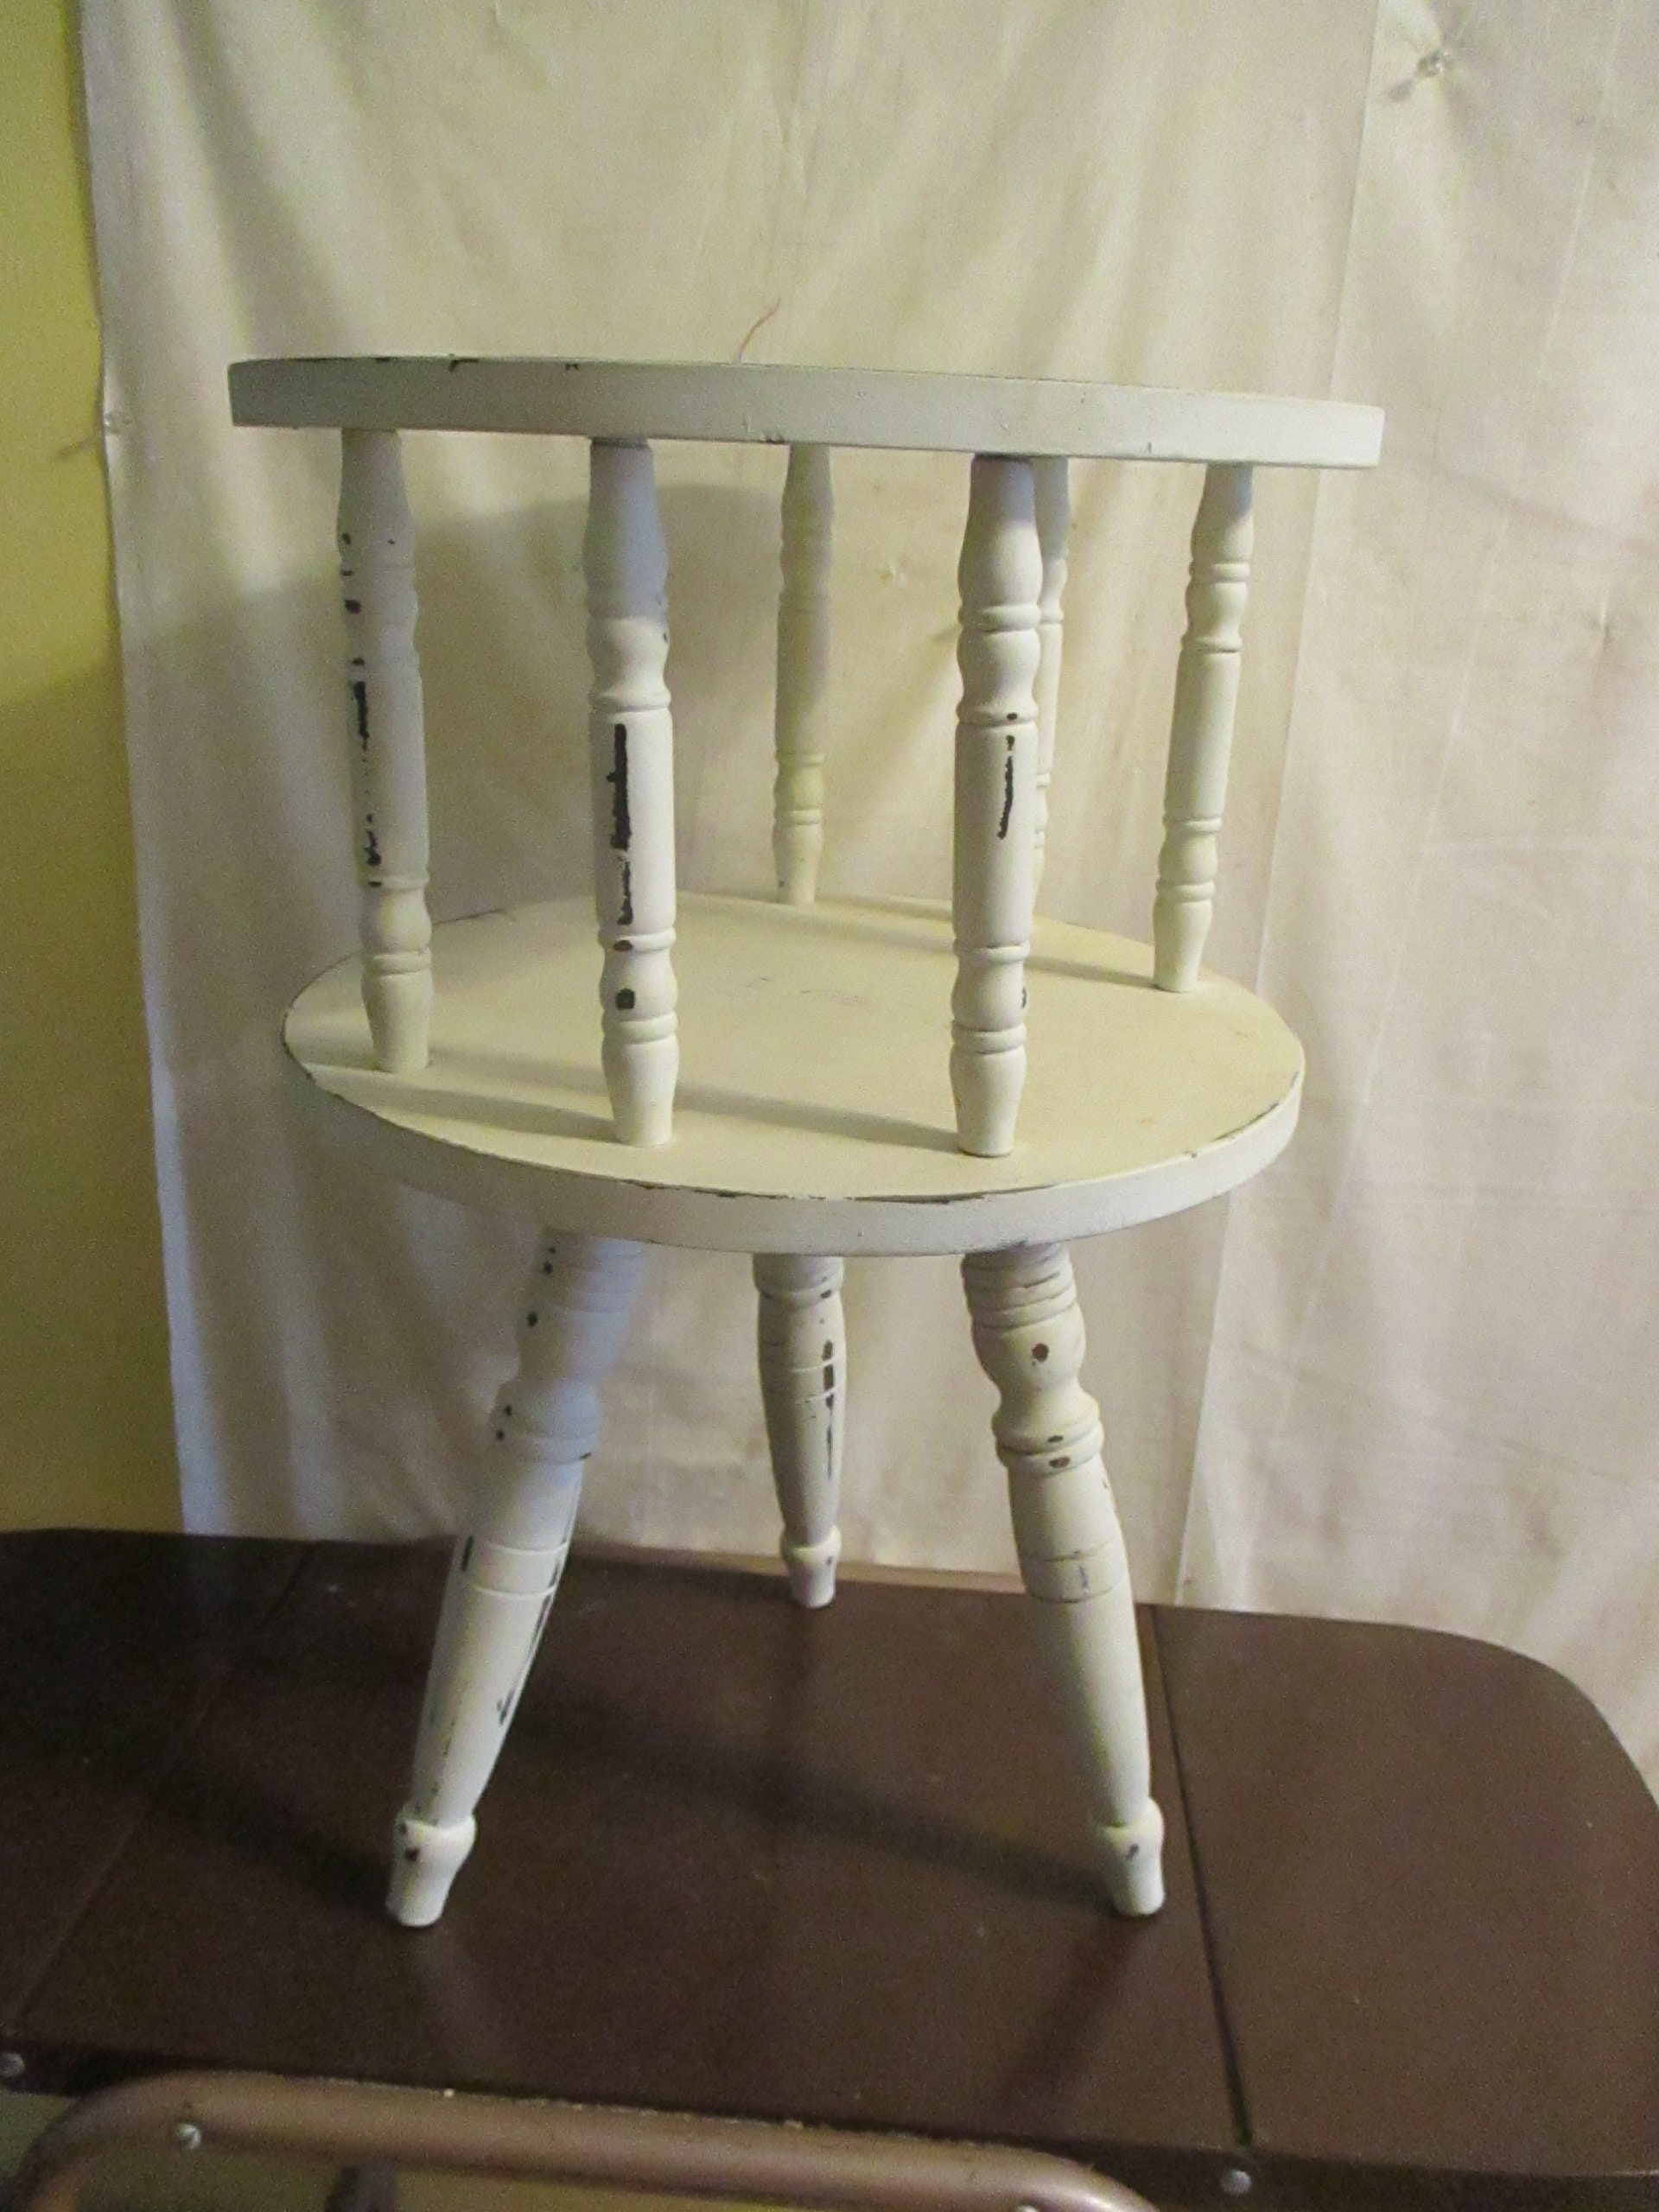 3 legged stool build